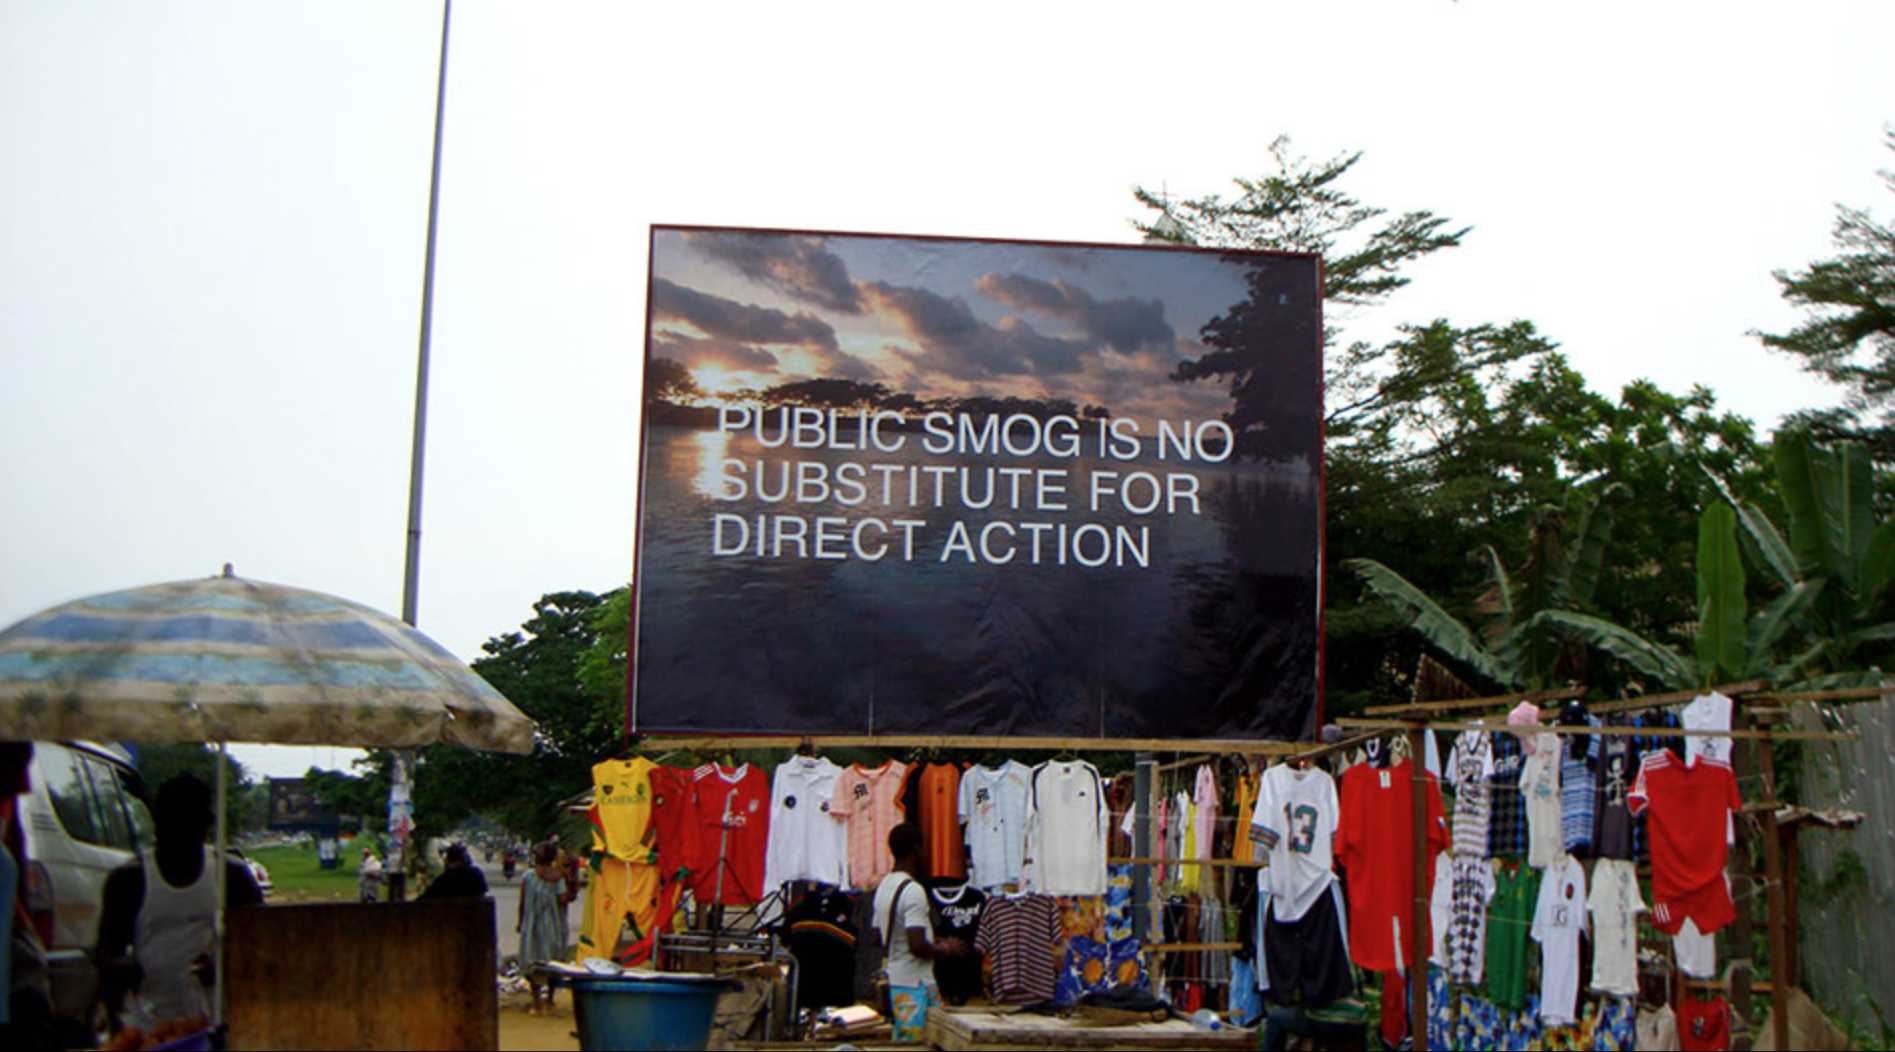 Amy Balkin, "Public smog is no substitute for direct action", Bonamoussadi, Douala, 2009, Billboard. Photo: Benoît Mangin, Courtesy the artist.